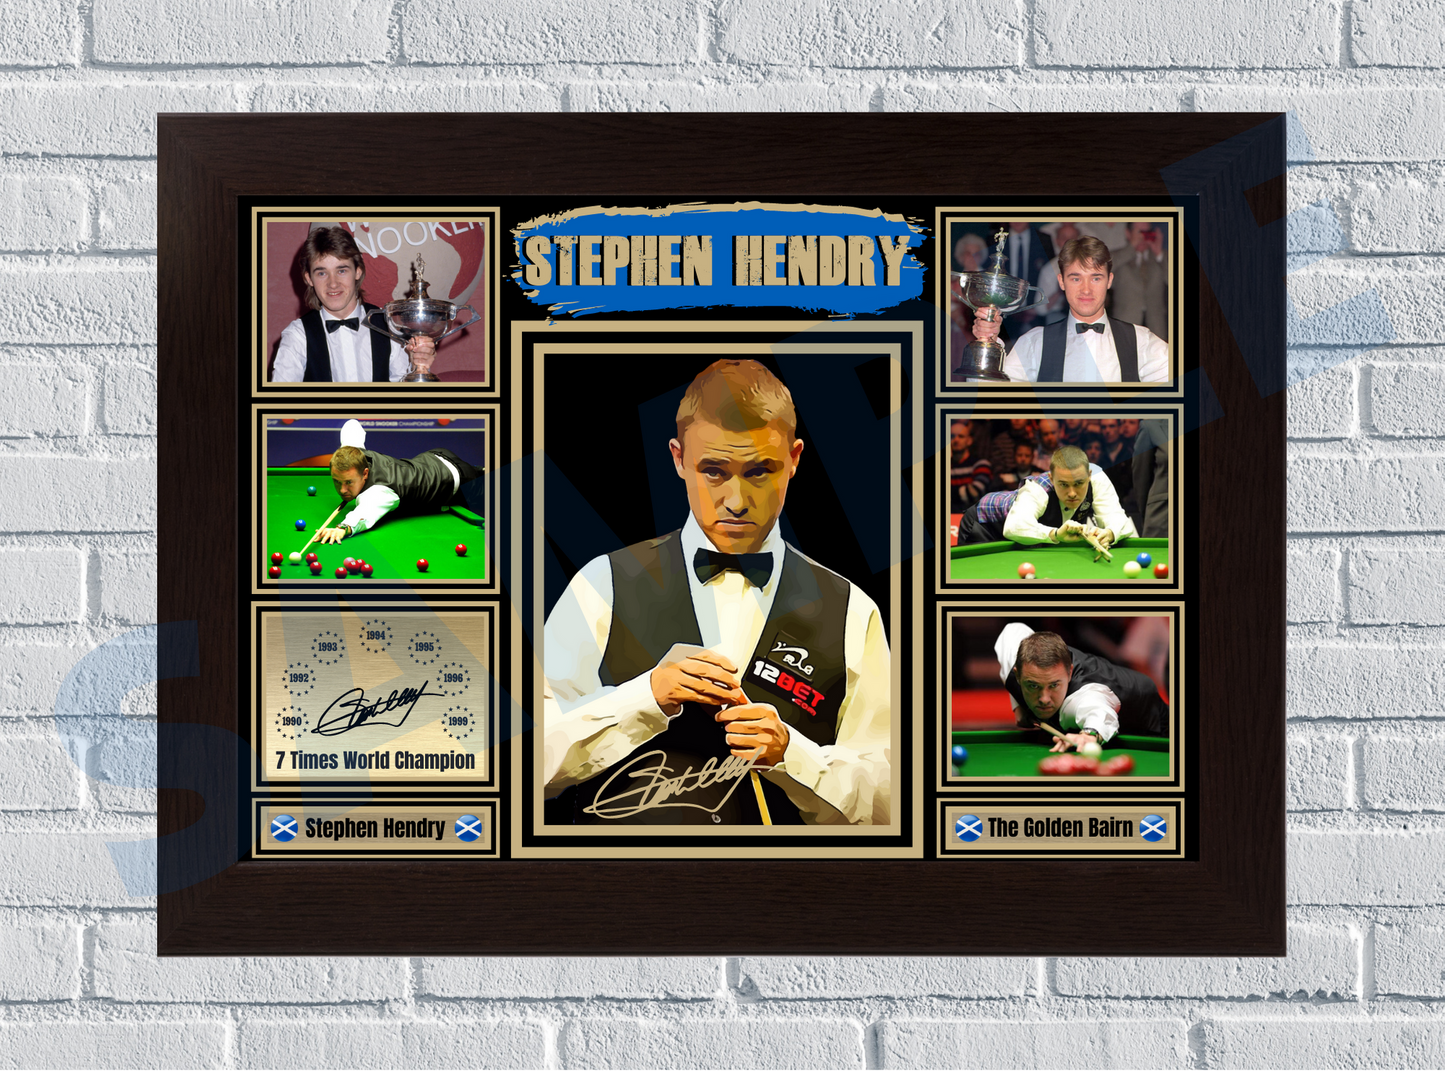 Stephen Hendry (Snooker) #17 - Collectible/Memorabilia/Print signed